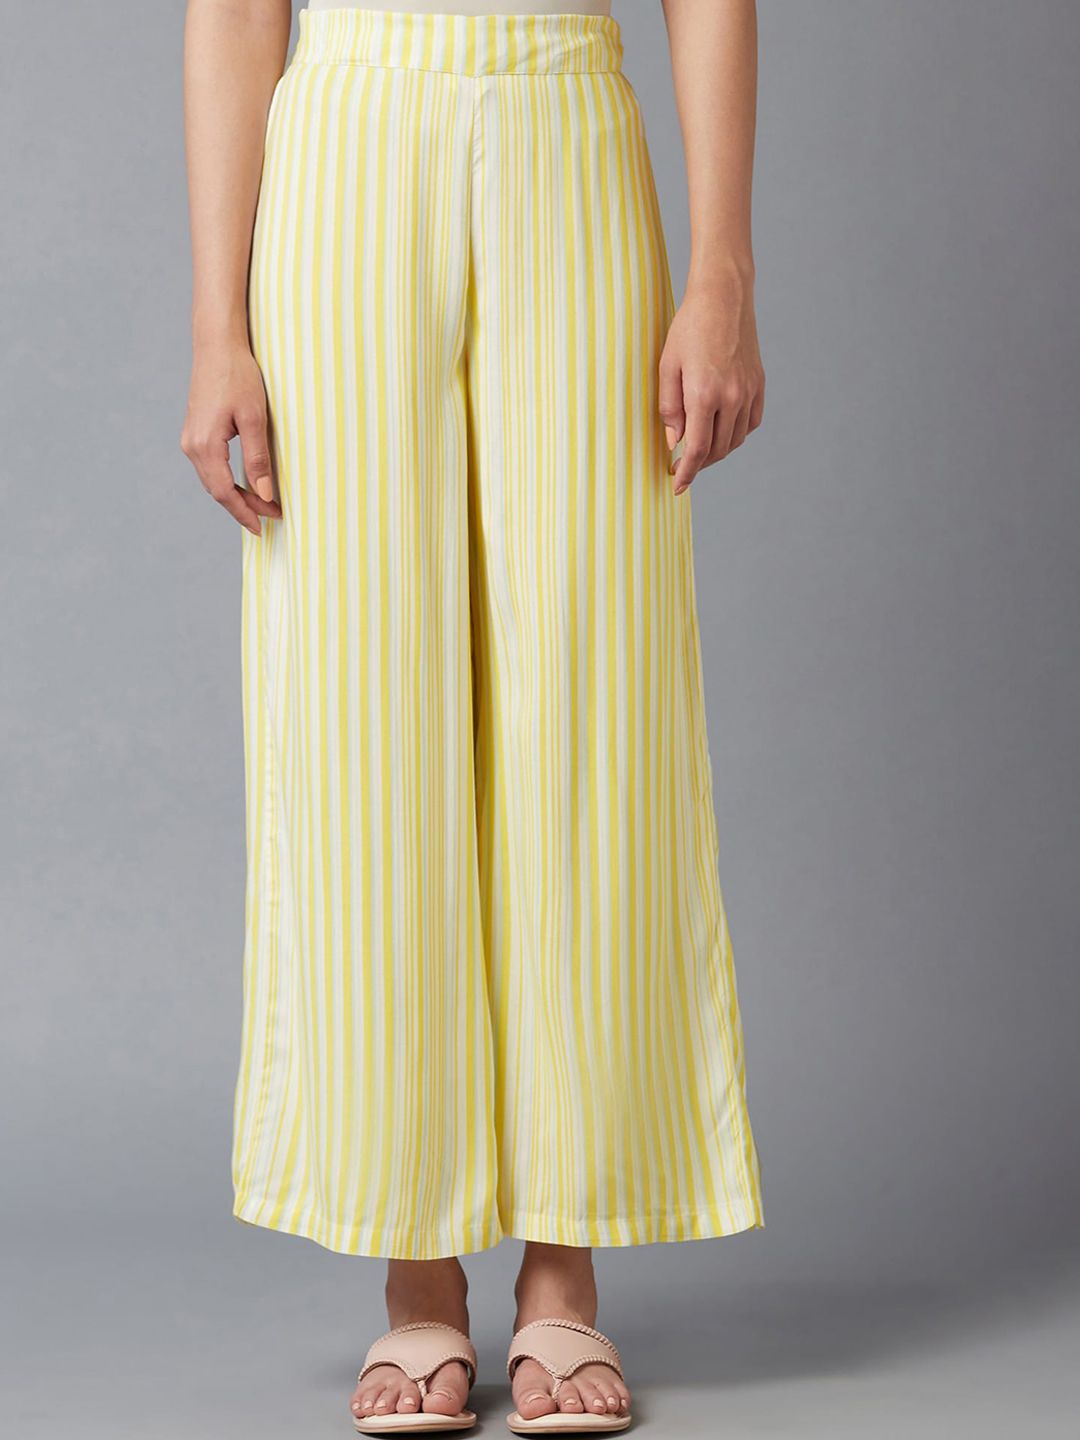 W Women Yellow Striped Trousers Price in India